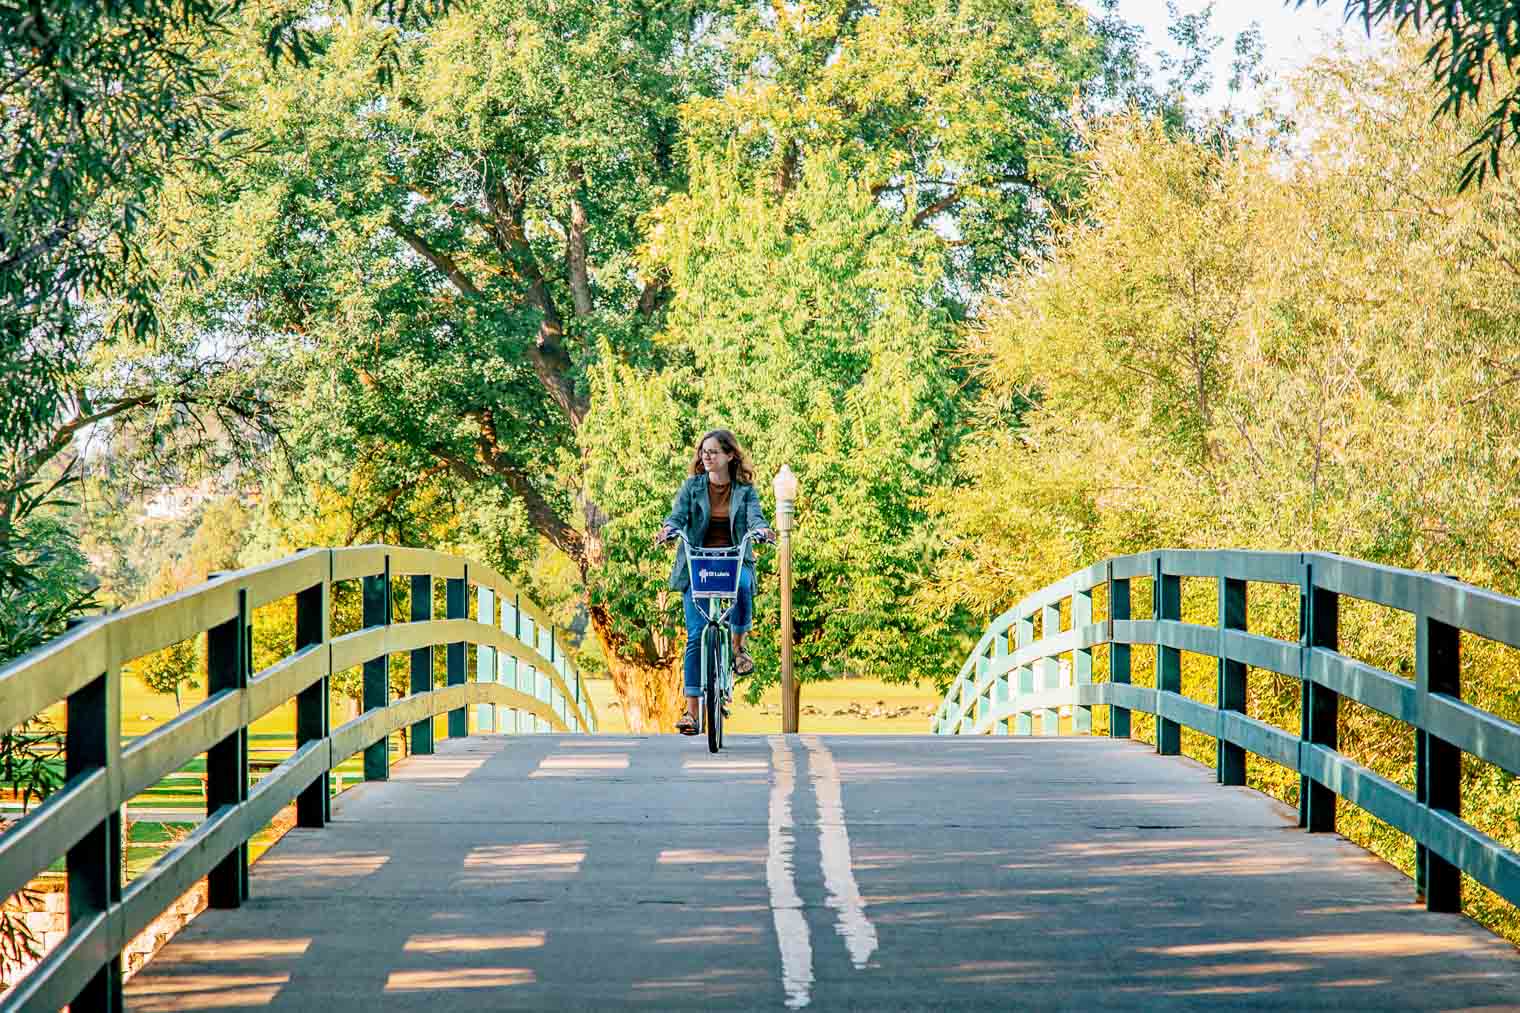 Megan Bike Riding in Greenbelt Park in Boise, Idaho